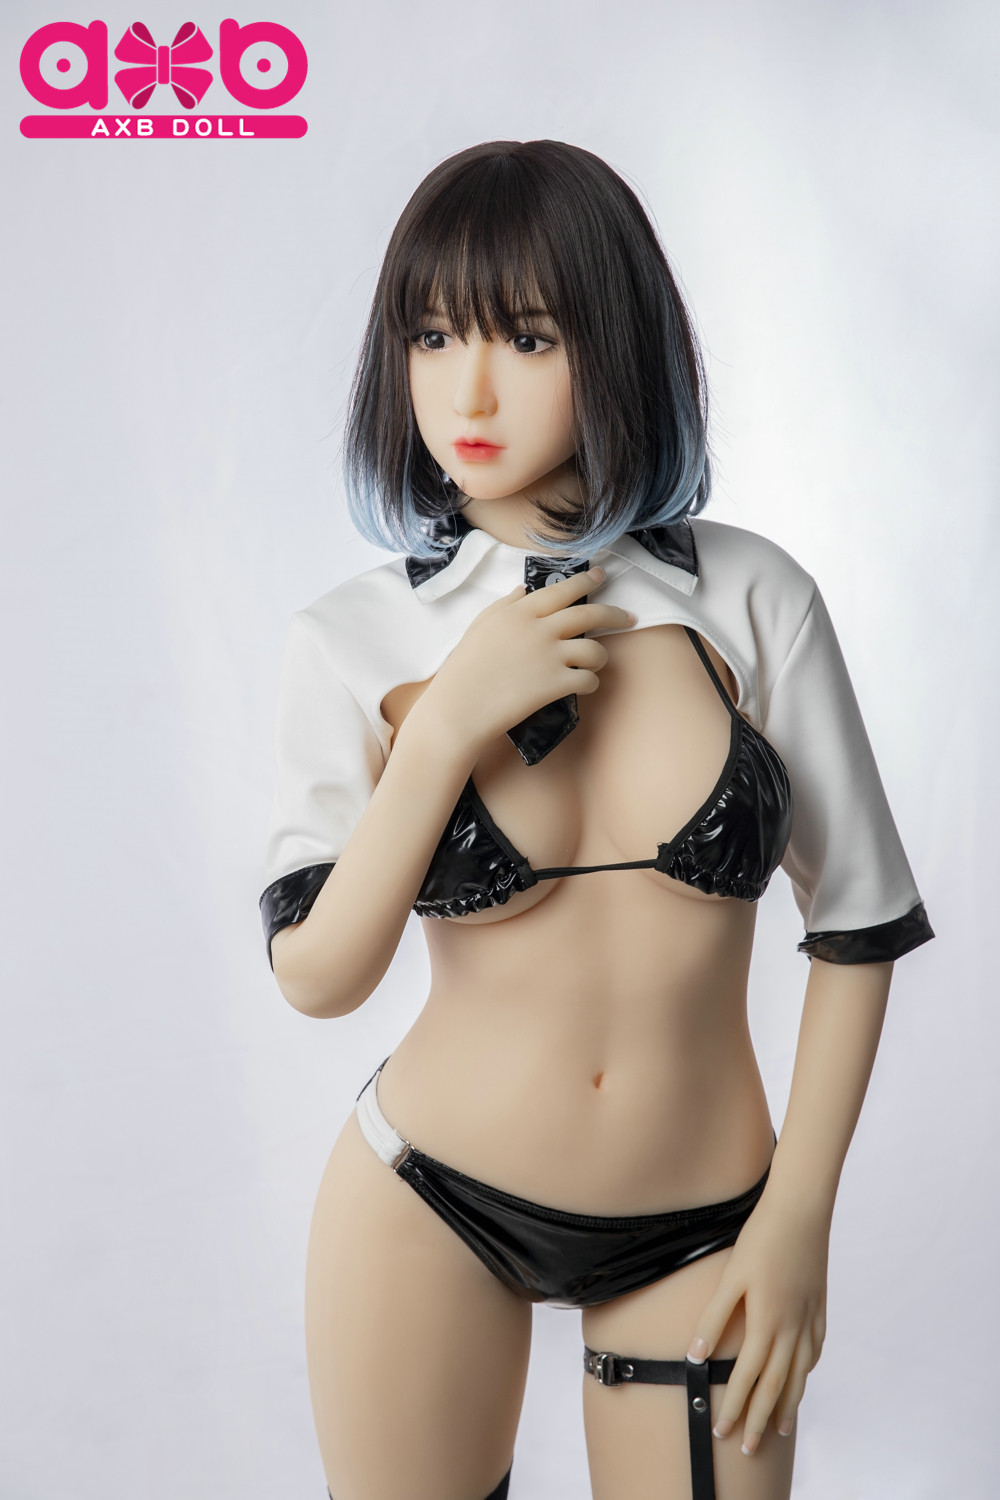 AXBDOLL 160cm A118# TPE AnimeLove Doll Life Size Sex Dolls - 画像をクリックして閉じます